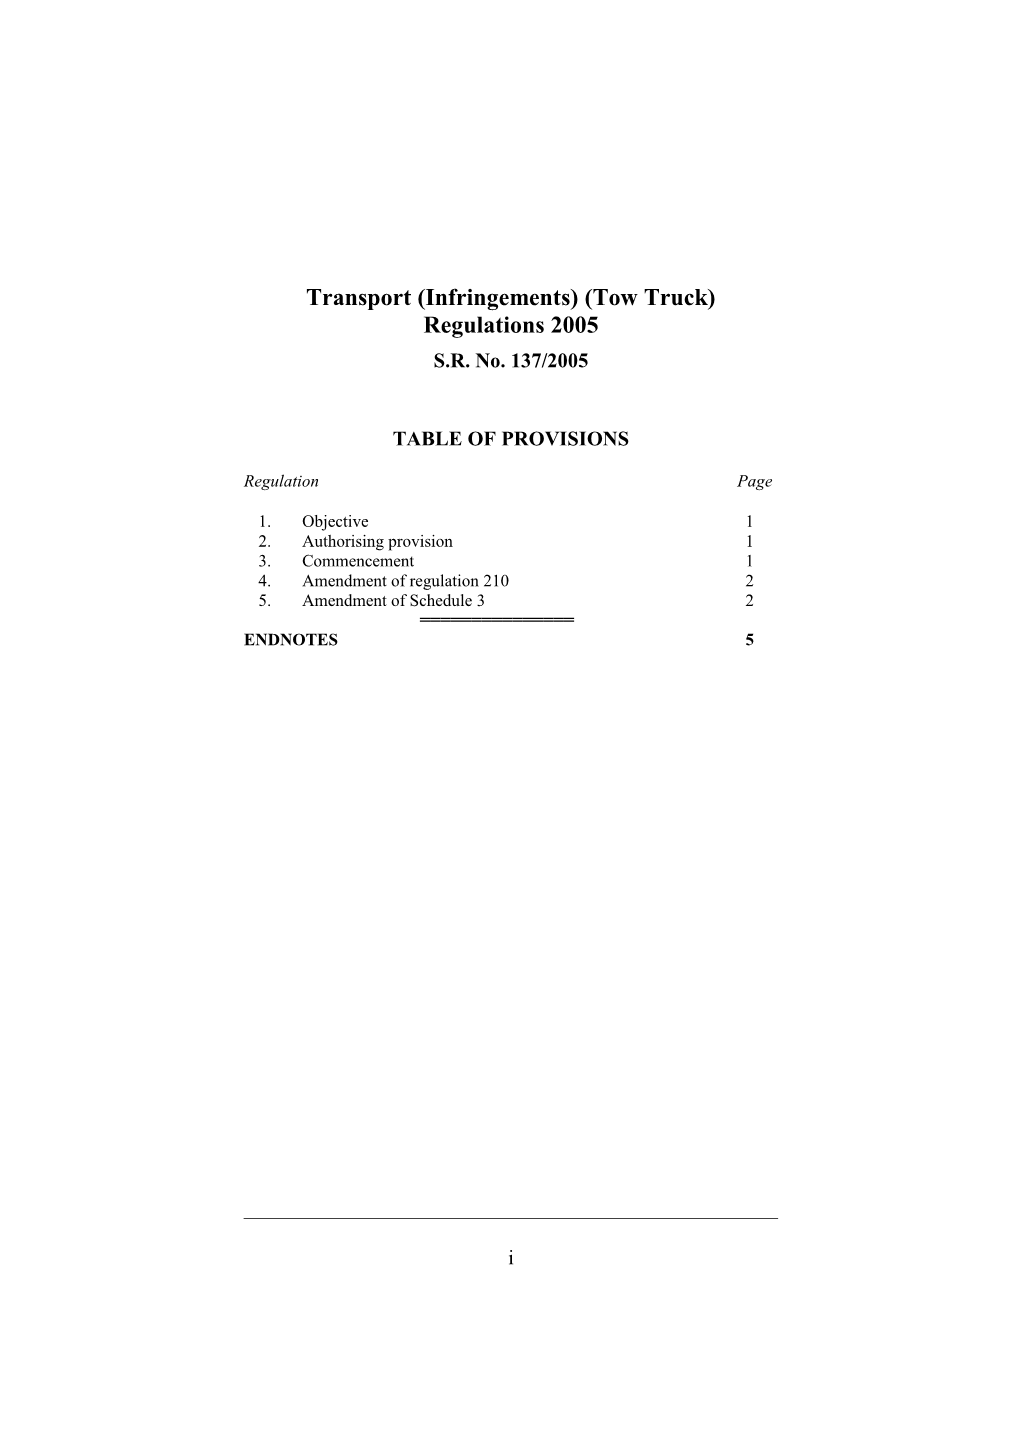 Transport (Infringements) (Tow Truck) Regulations 2005